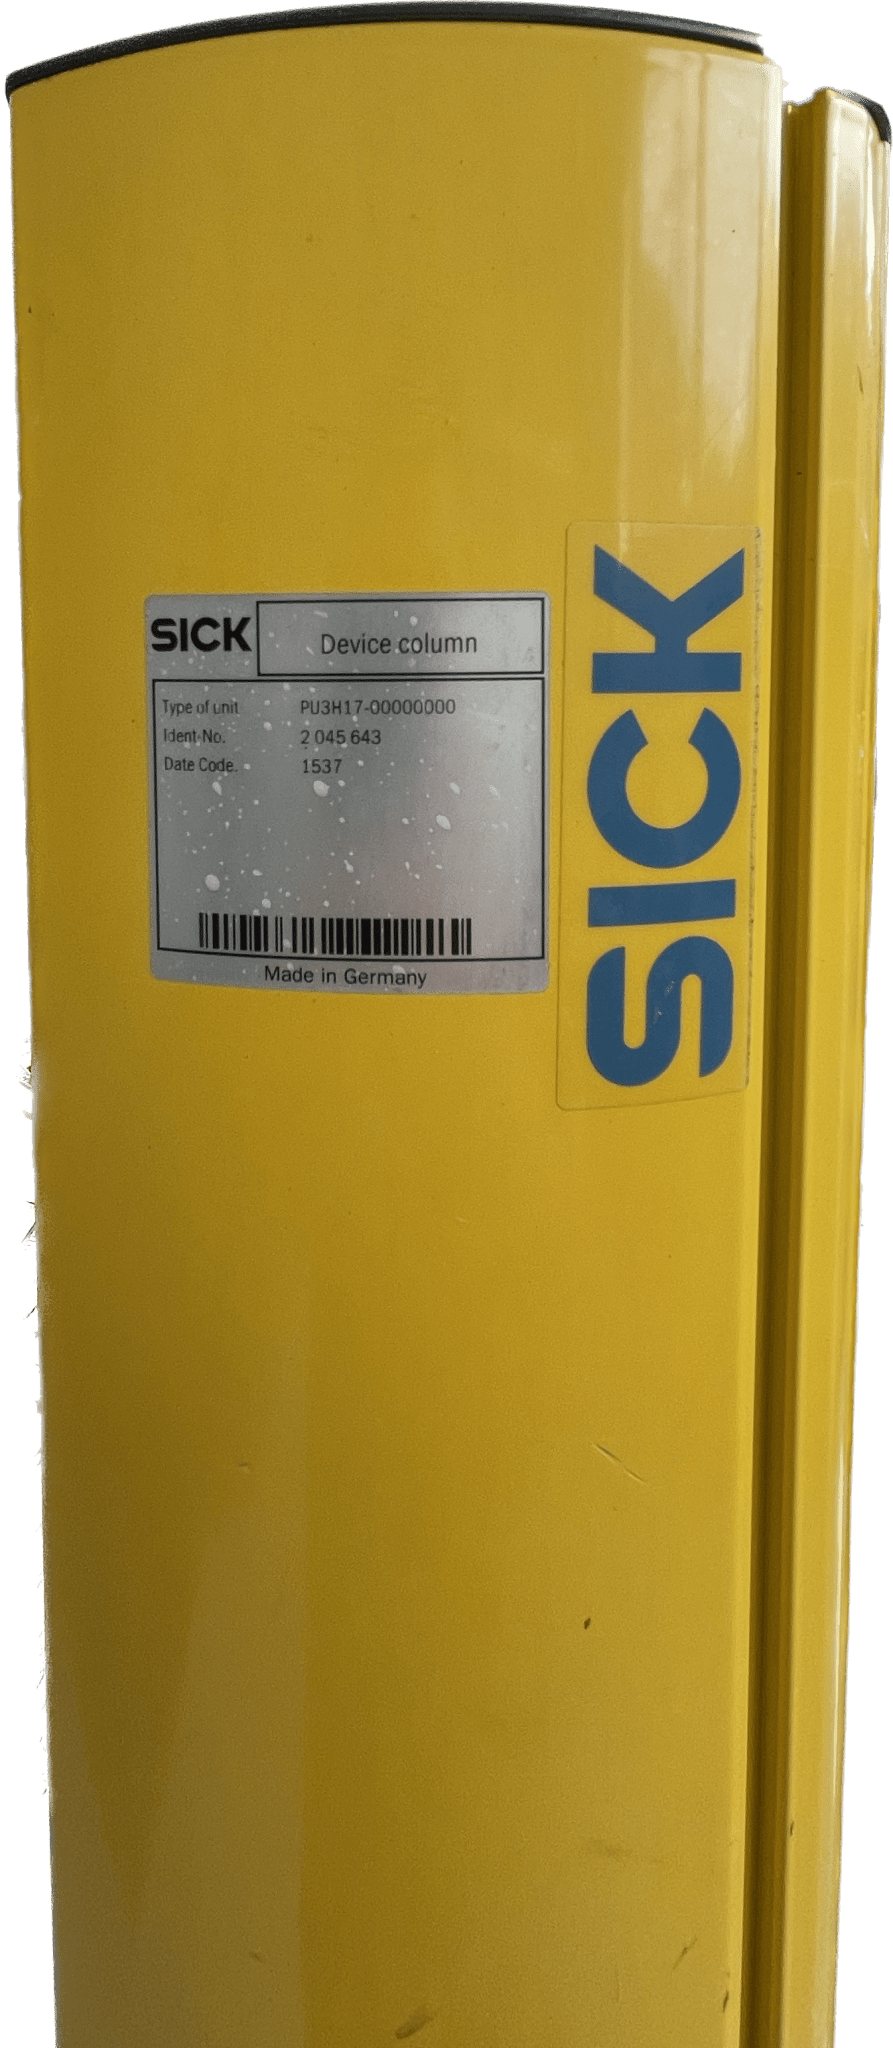 Sick PU3H17-00000000 - #product_category# | Klenk Maschinenhandel